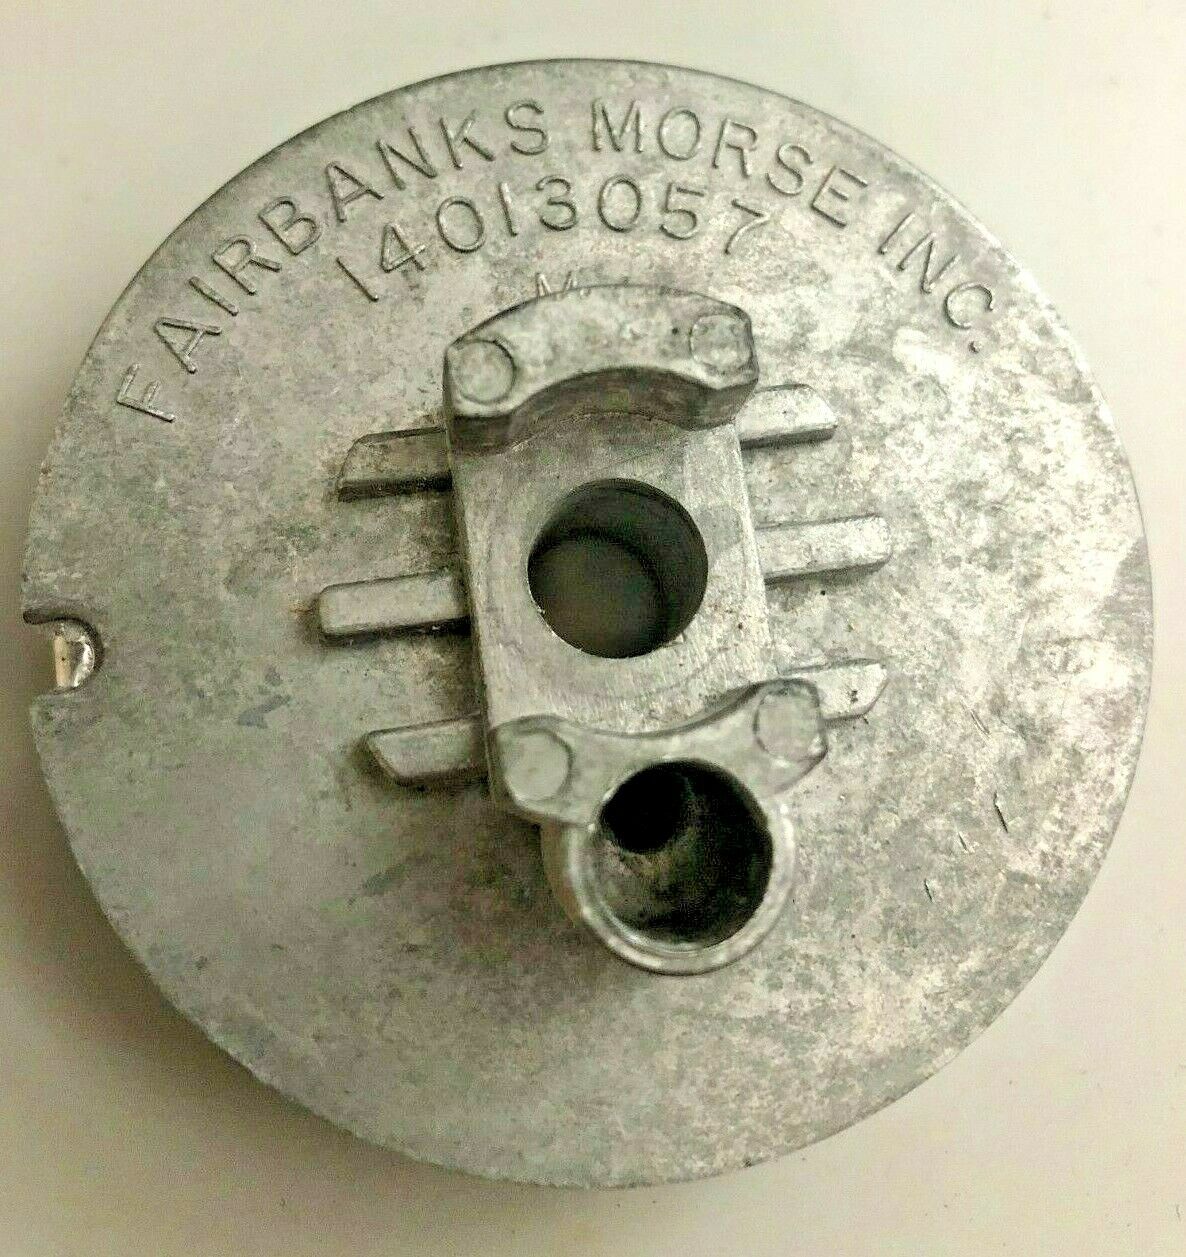 Fairbanks Morse Inc 14013057